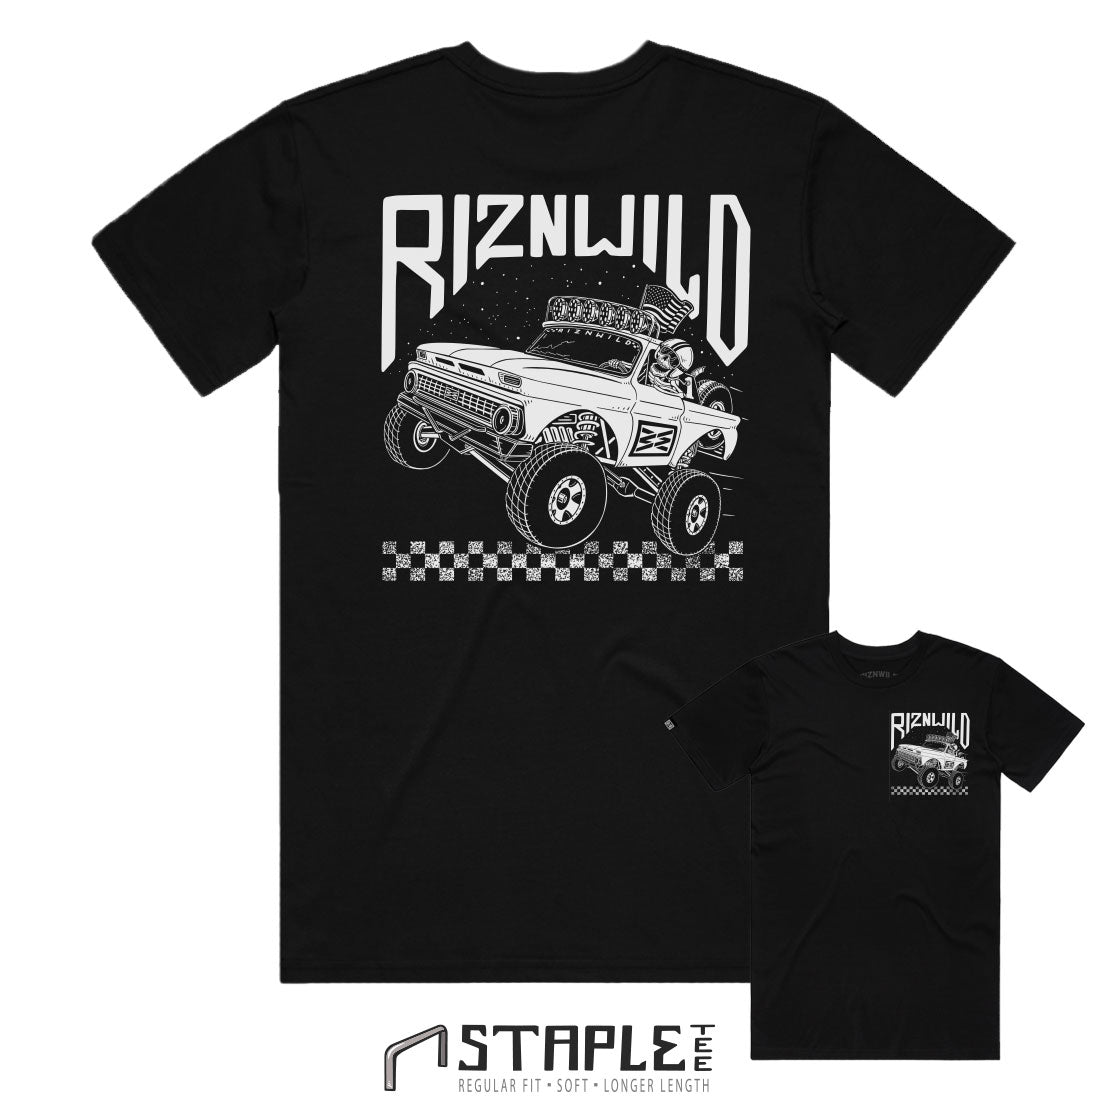 RIZNWILD off road trophy truck logo printed on a black mens soft tee